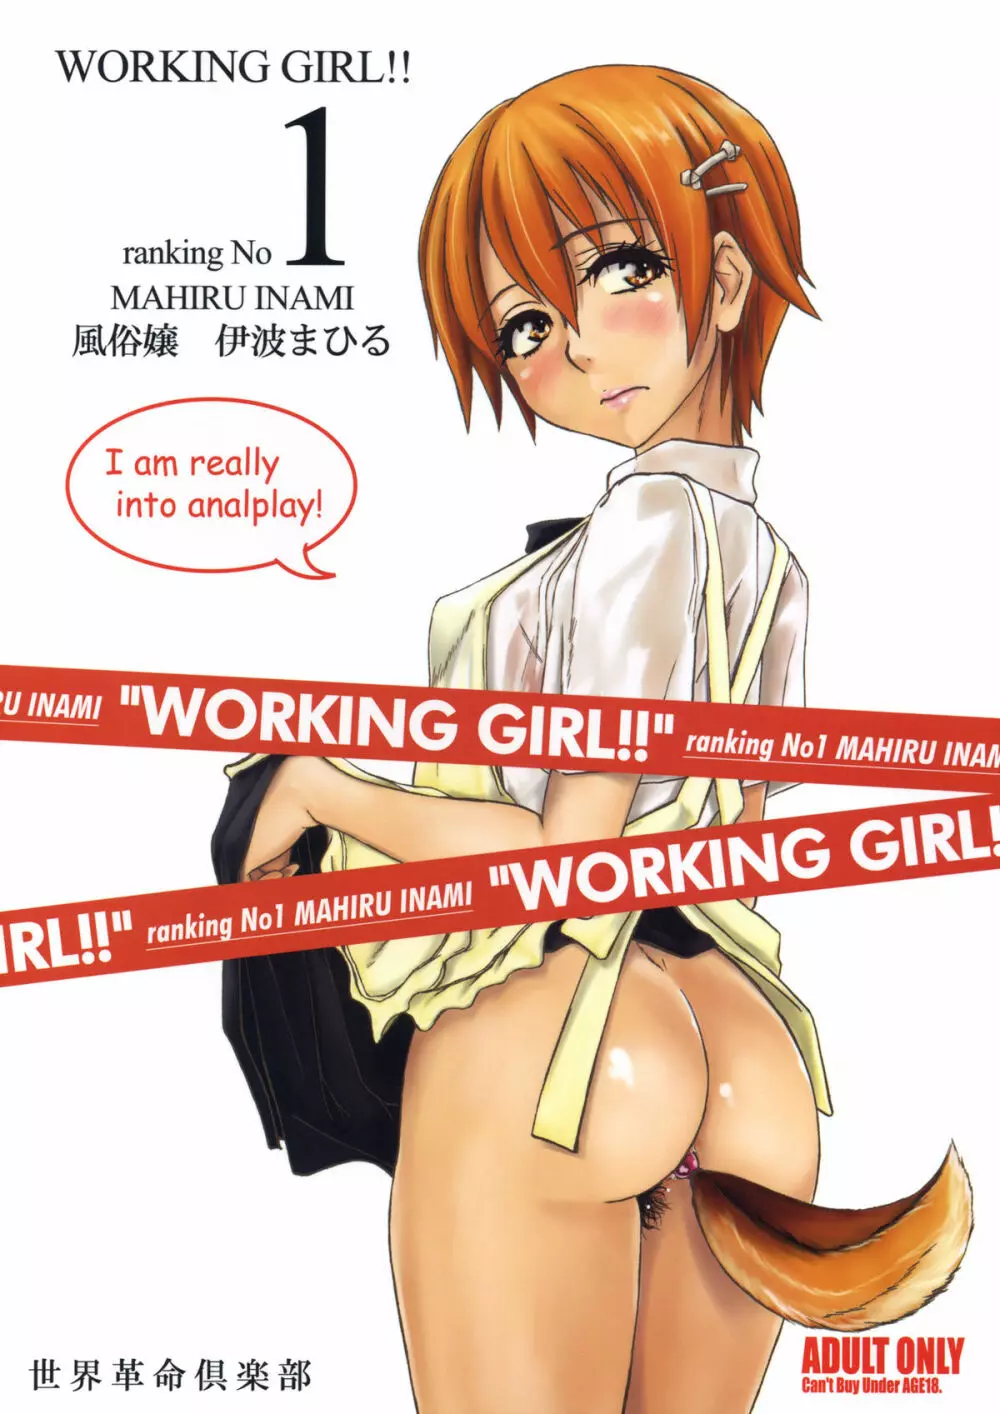 WORKING GIRL!! ranking No 1 風俗嬢 伊波まひる